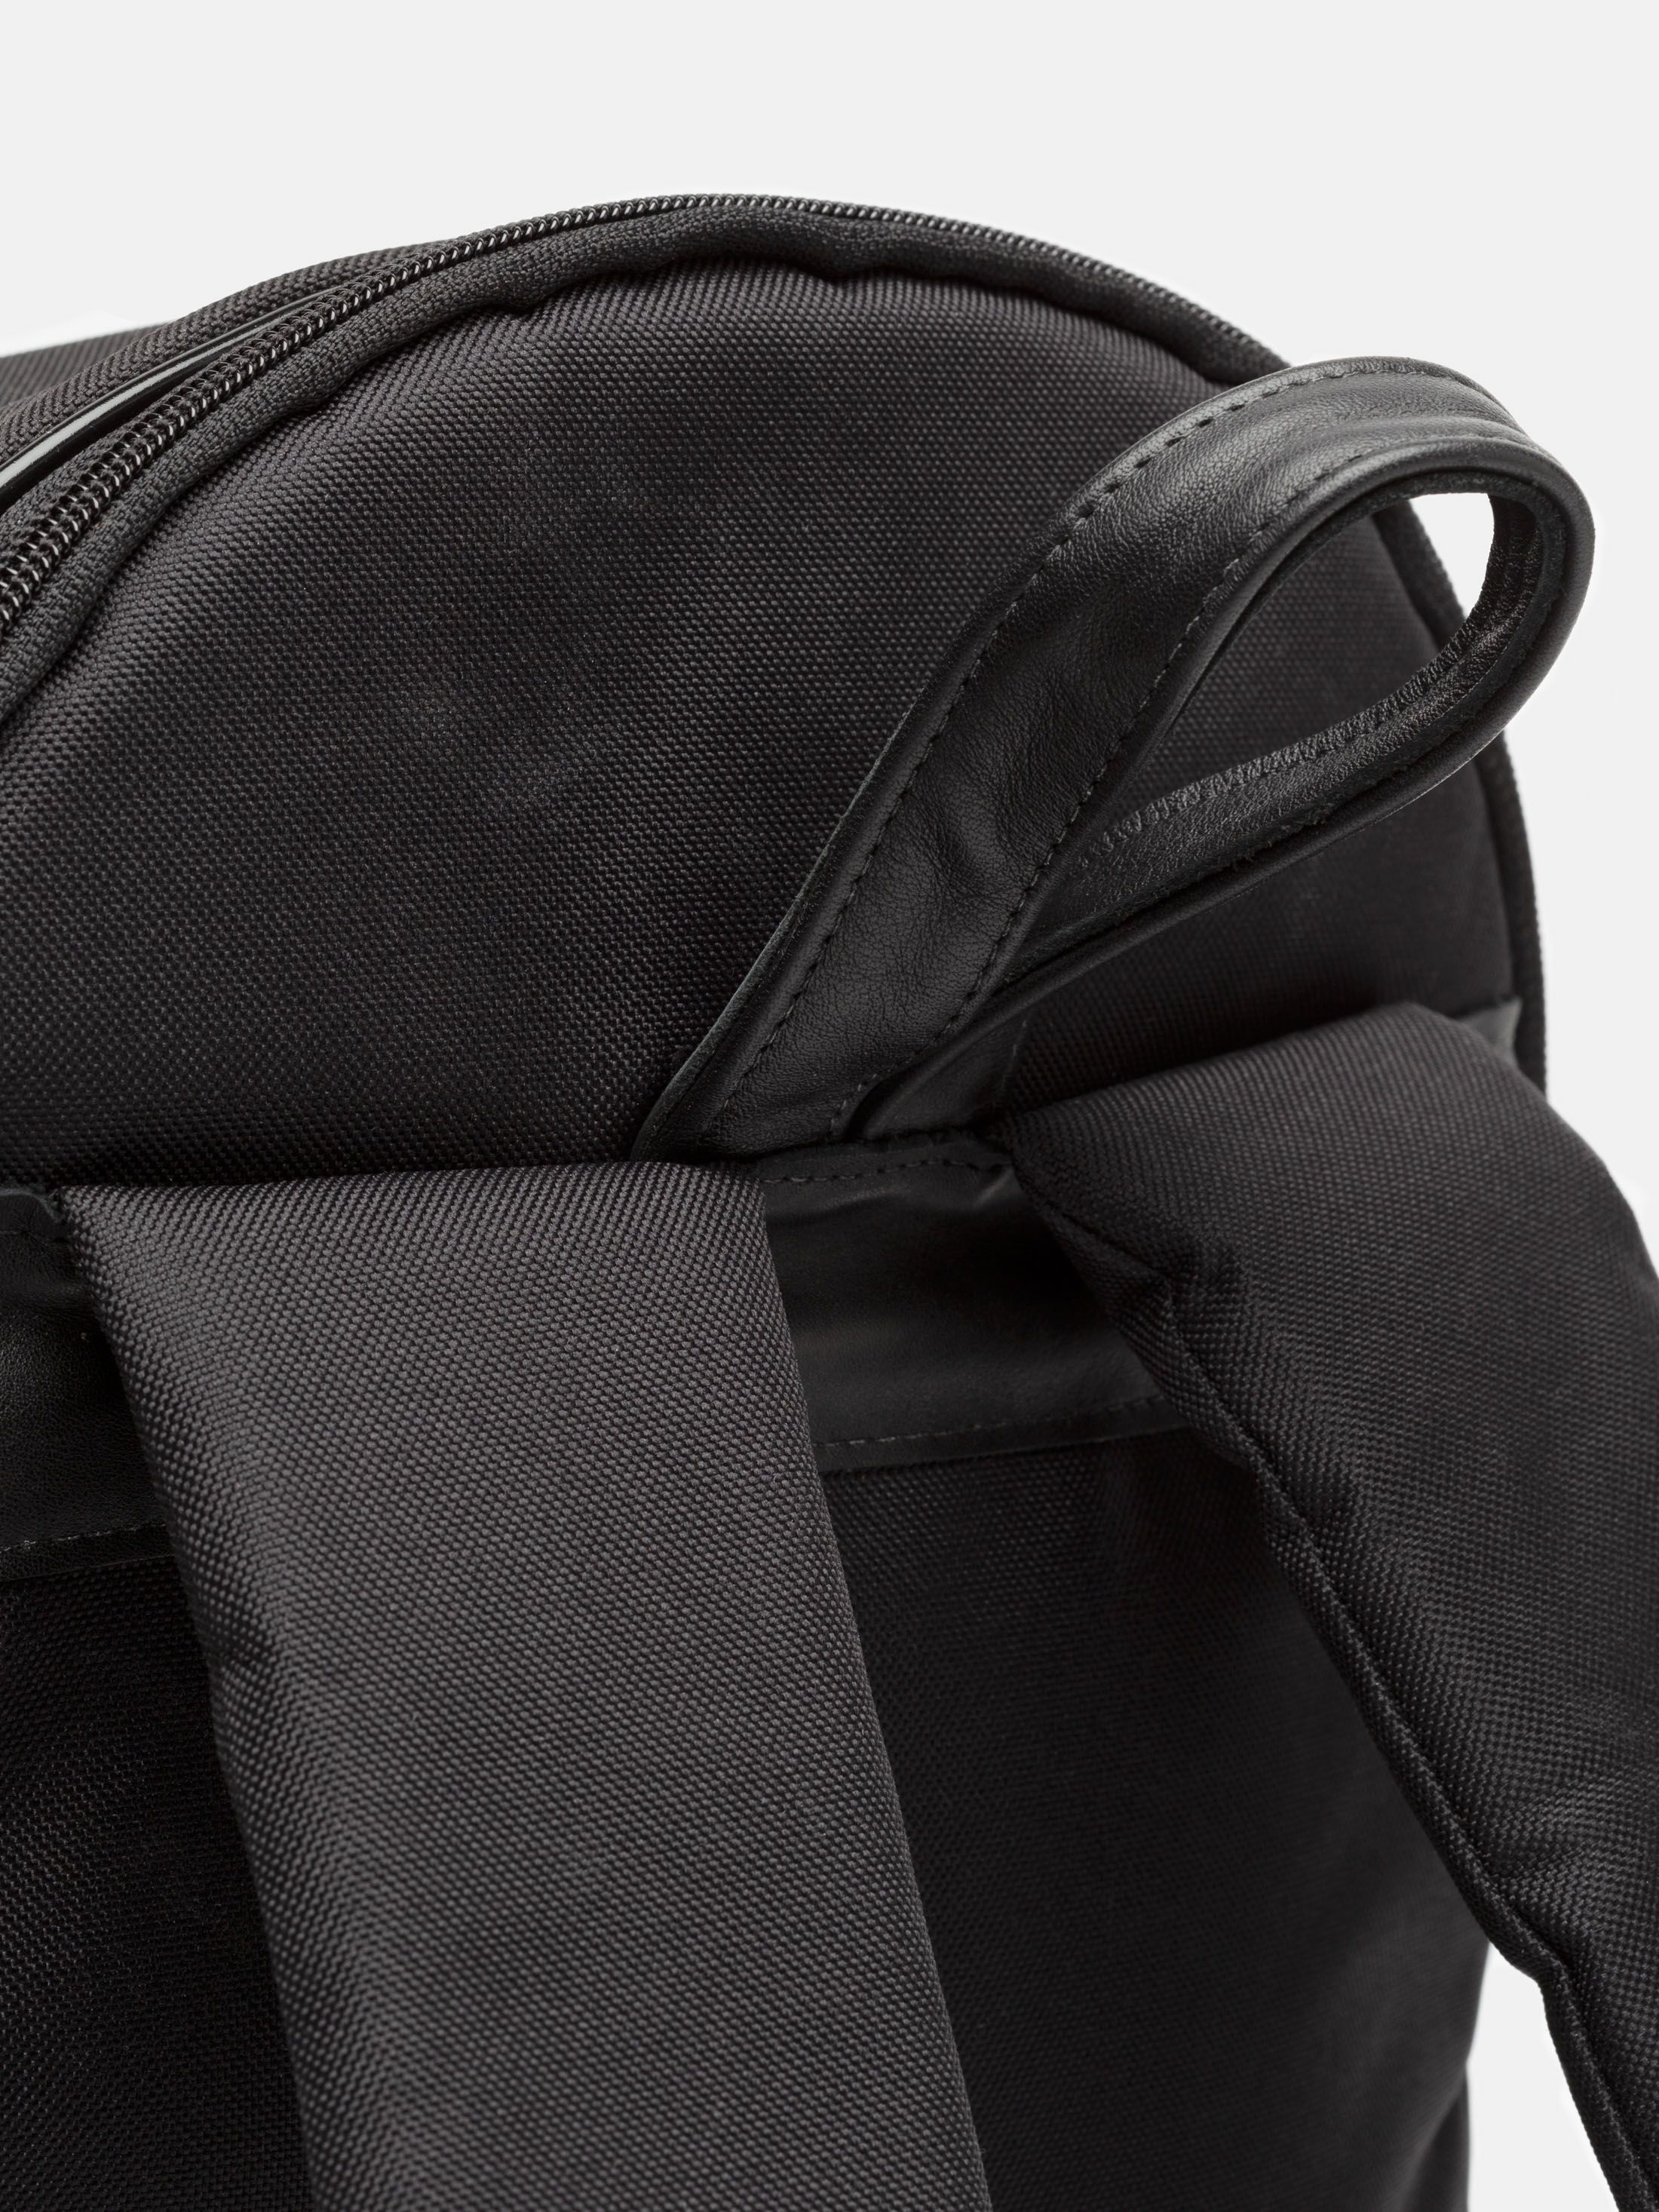 Design Your Own Backpack | Your Design on Custom Backpacks